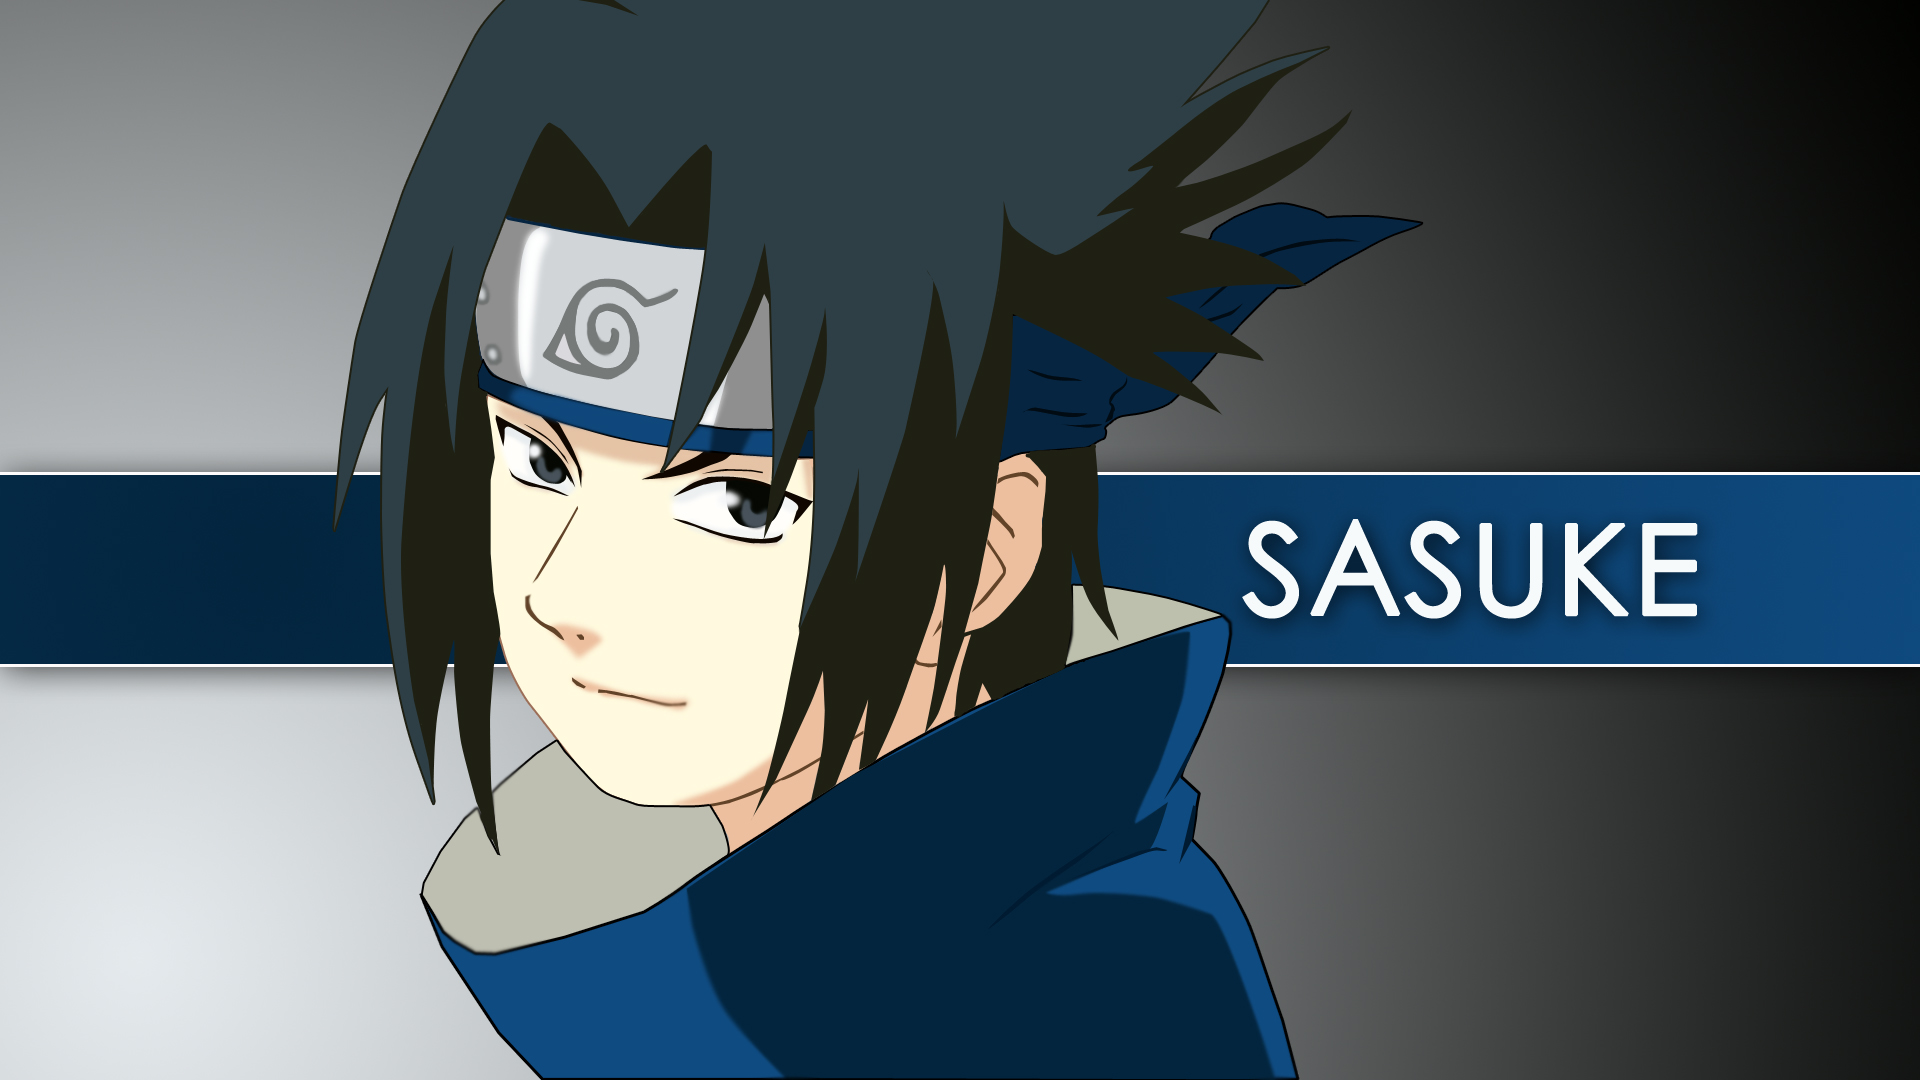 sasuke wallpaper,anime,cartoon,artwork,graphic design,animation